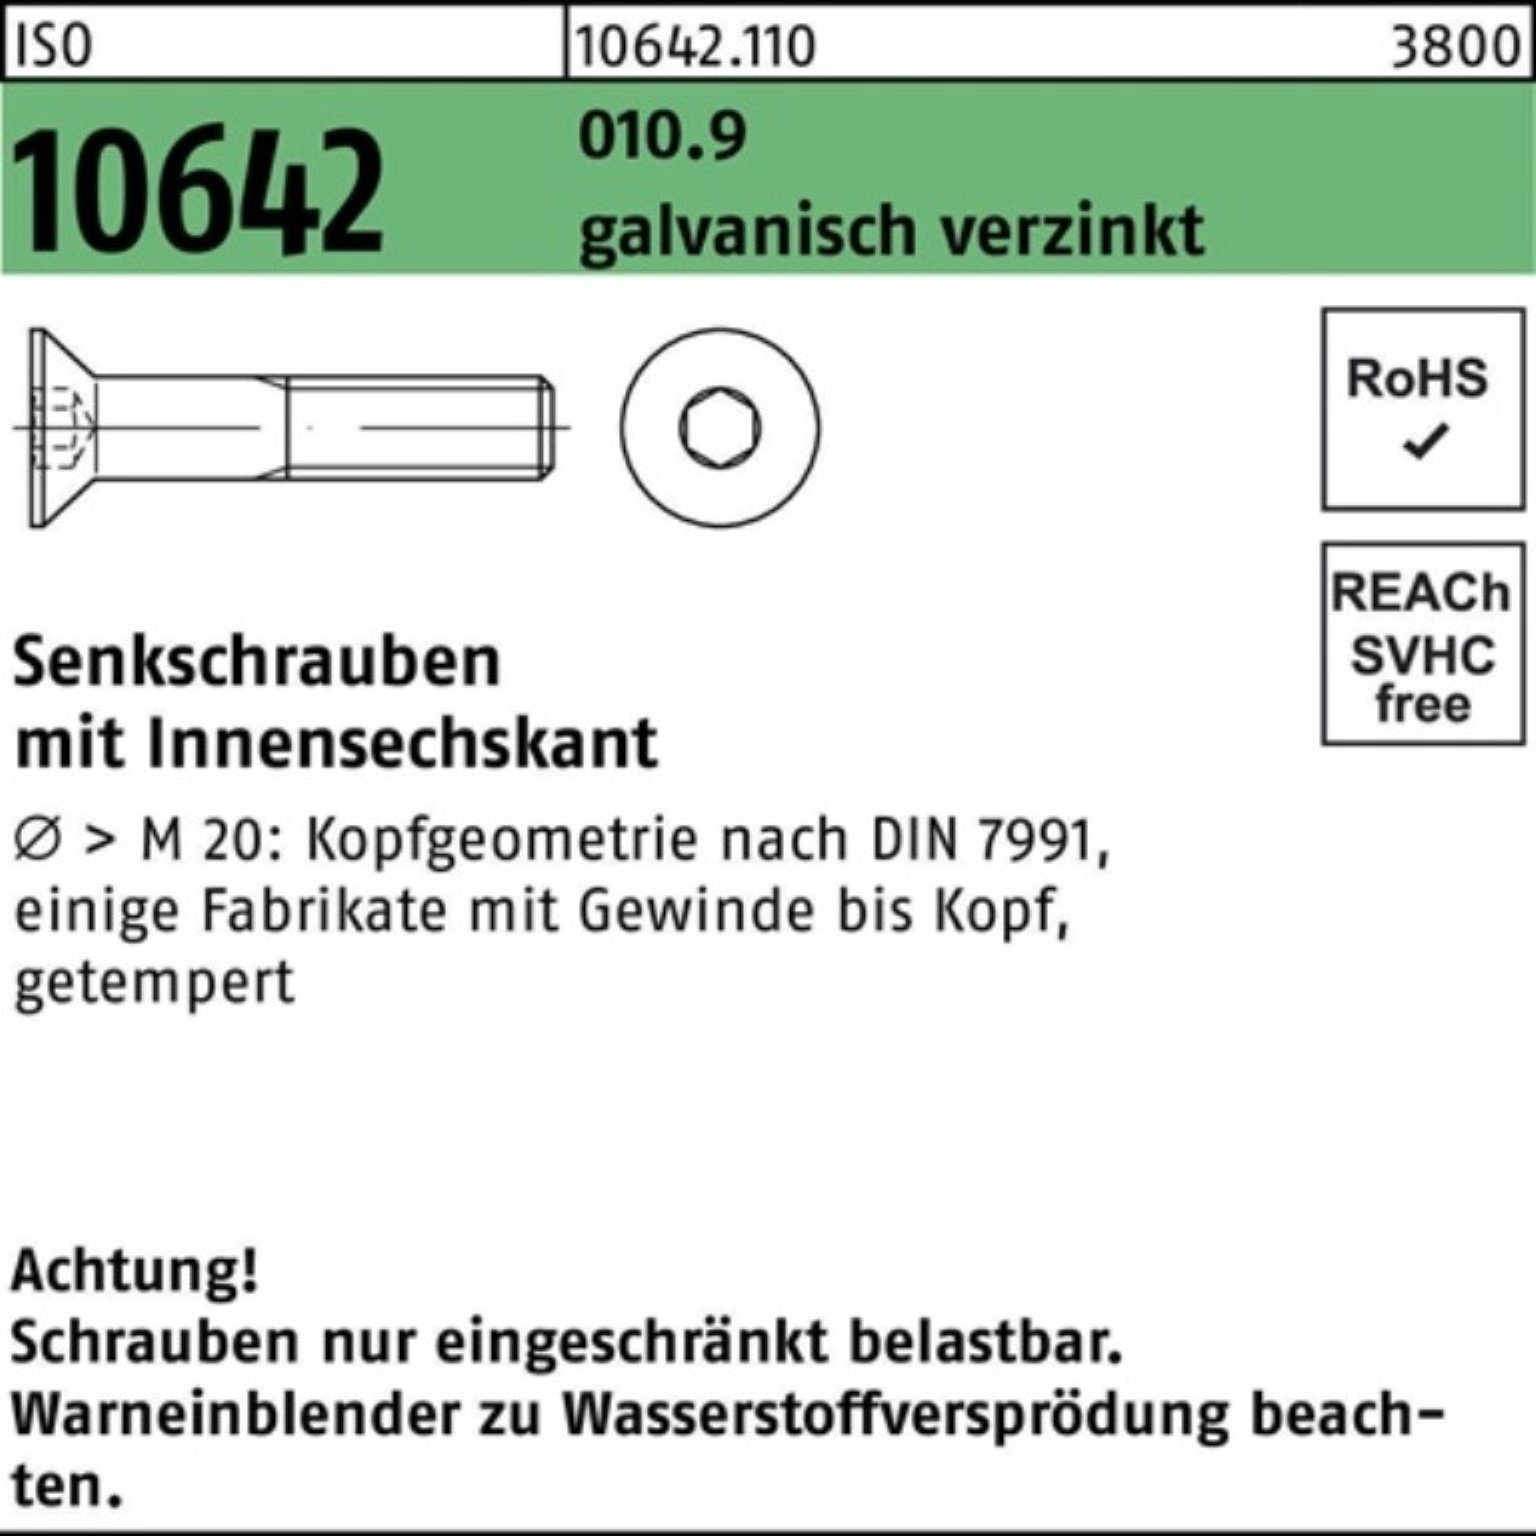 Reyher Senkschraube Innen-6kt Pack M4x 10642 010.9 galv.verz. 30 50 Senkschraube ISO 500er